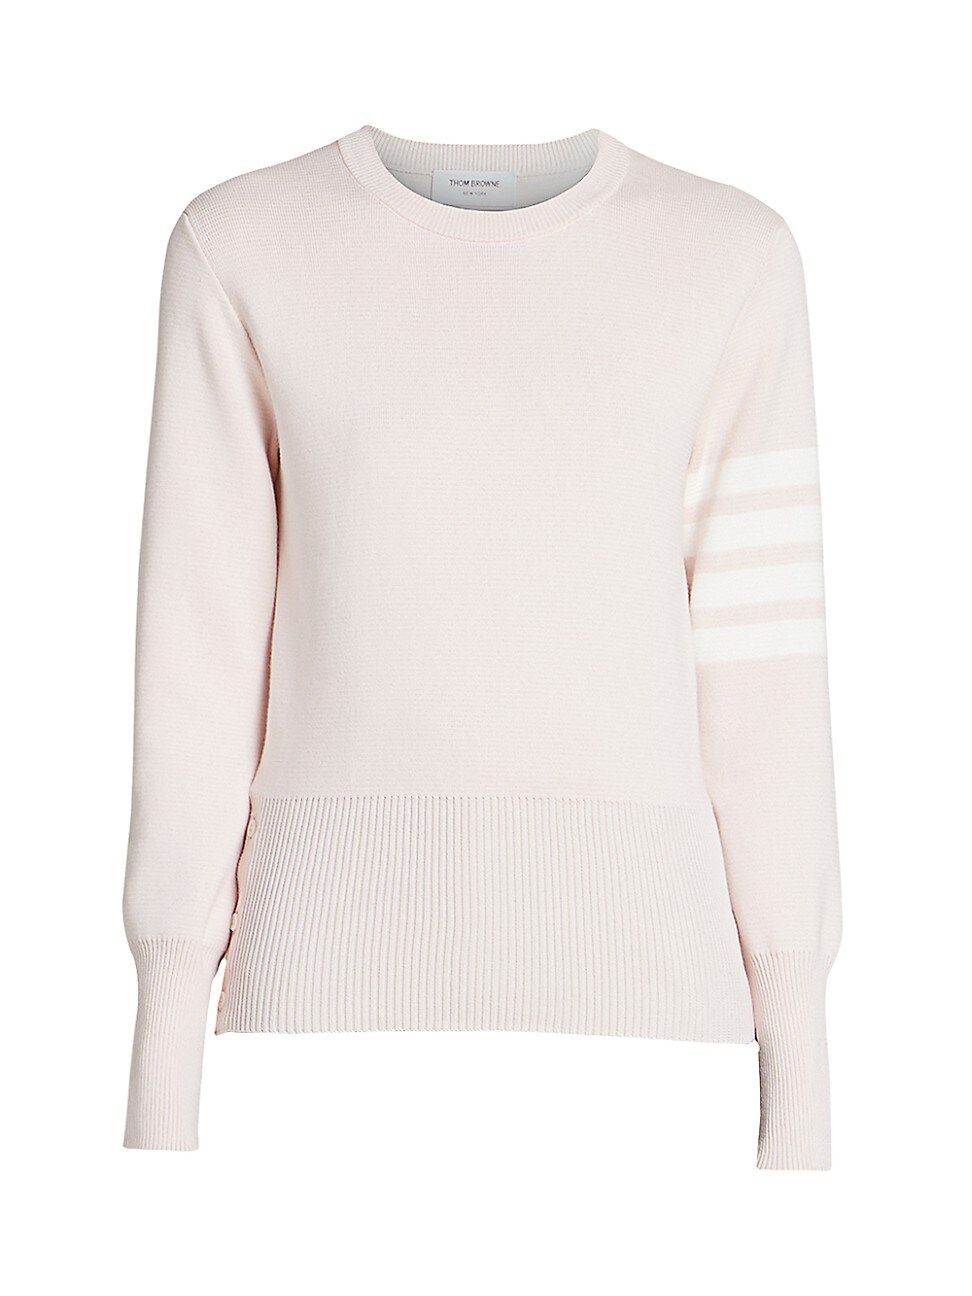 Thom Browne Women's Milano Stitch Classic Crew Sweater - Light Pink - Size 42 (6) | Saks Fifth Avenue